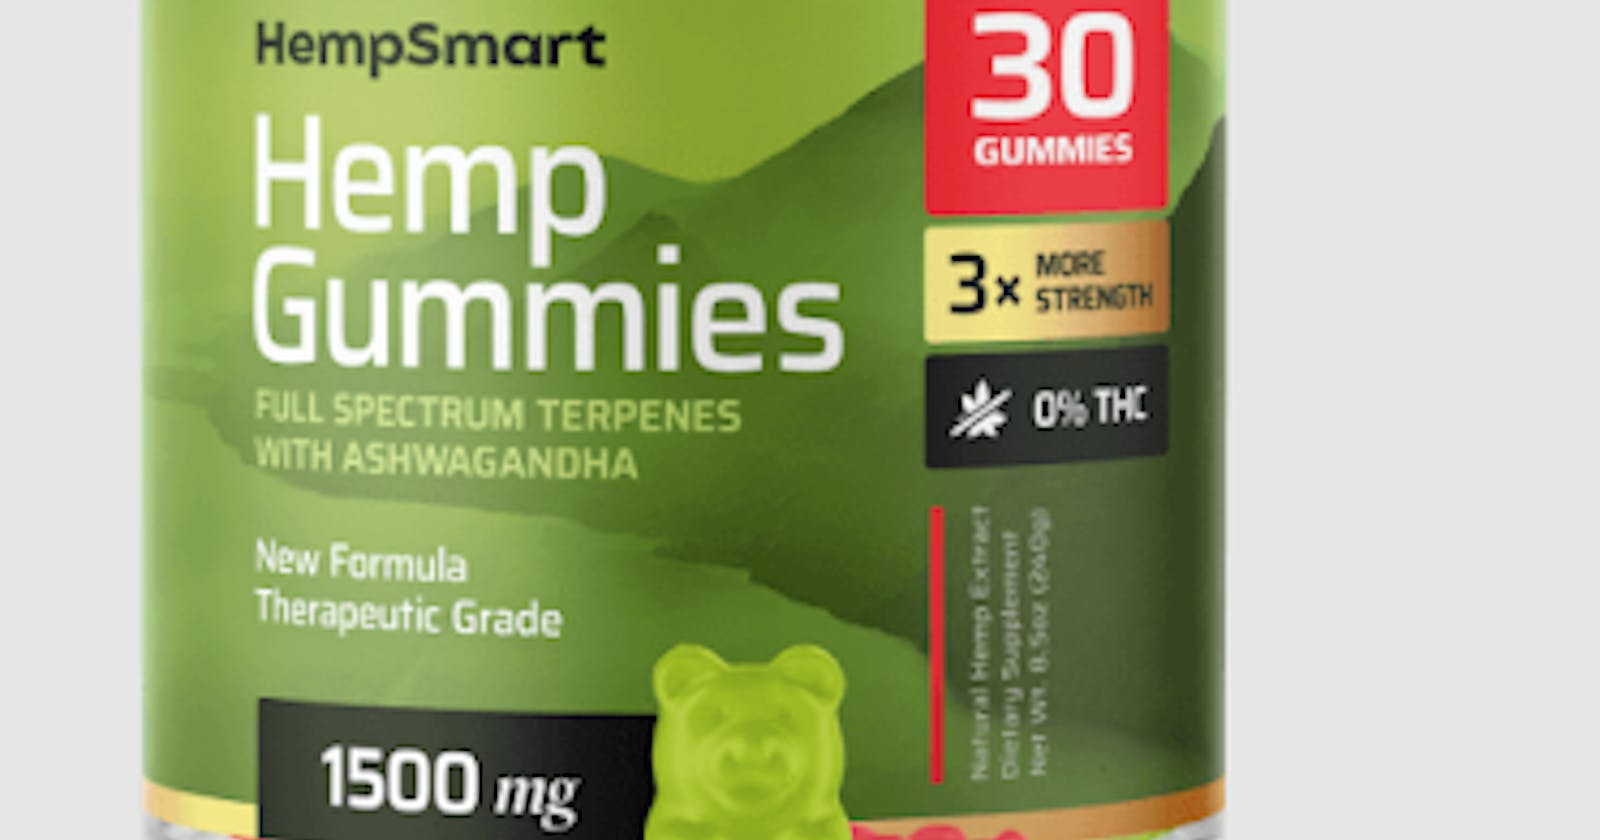 Get Your Daily Dose of Hemp with Hemp Smart Gummies